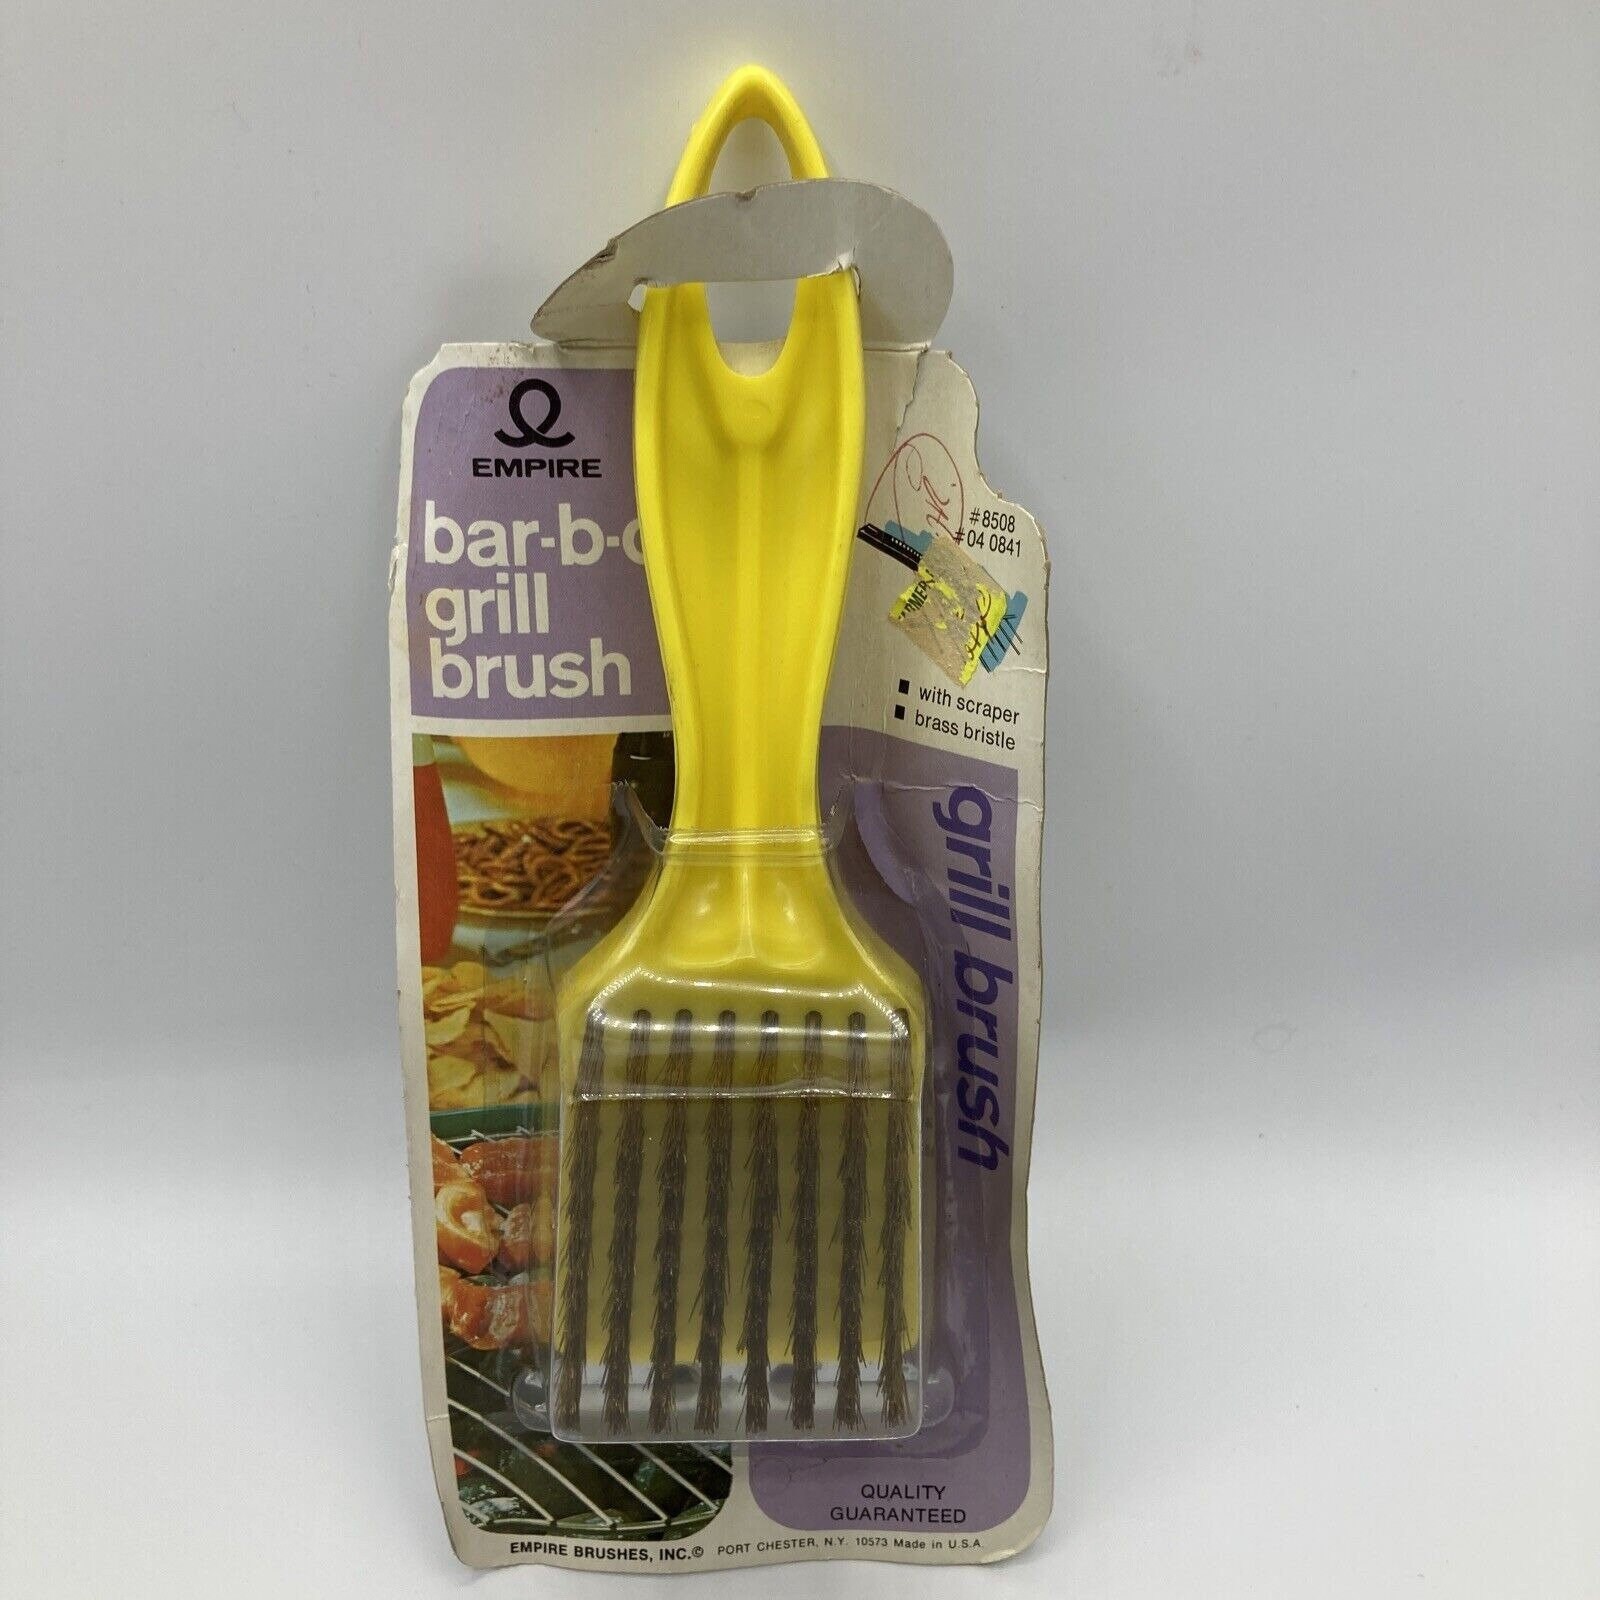 BBQ Accessories - Grill Brush - Grill Tools - Ultra Stiff Drill Brush Attachment Kit - Grill Scraper - Wire Brush Alternative - Grill Cleaner - Rust